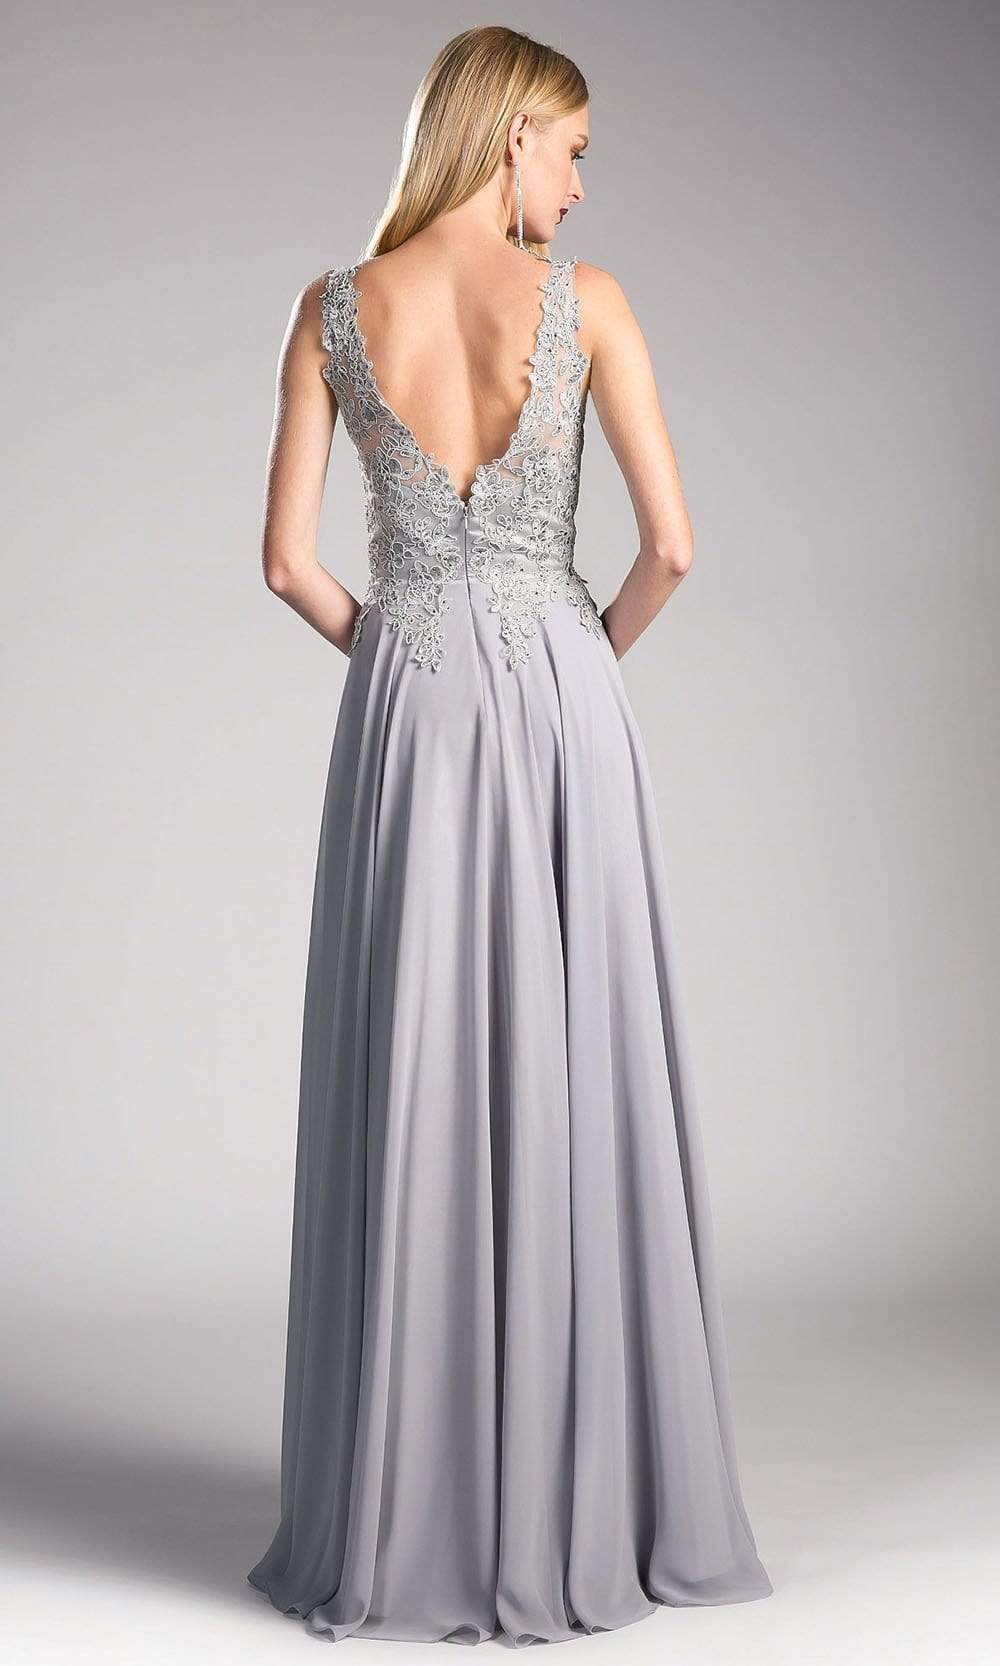 Cinderella Divine - 9177 Beaded Lace V-neck A-line Dress in Purple